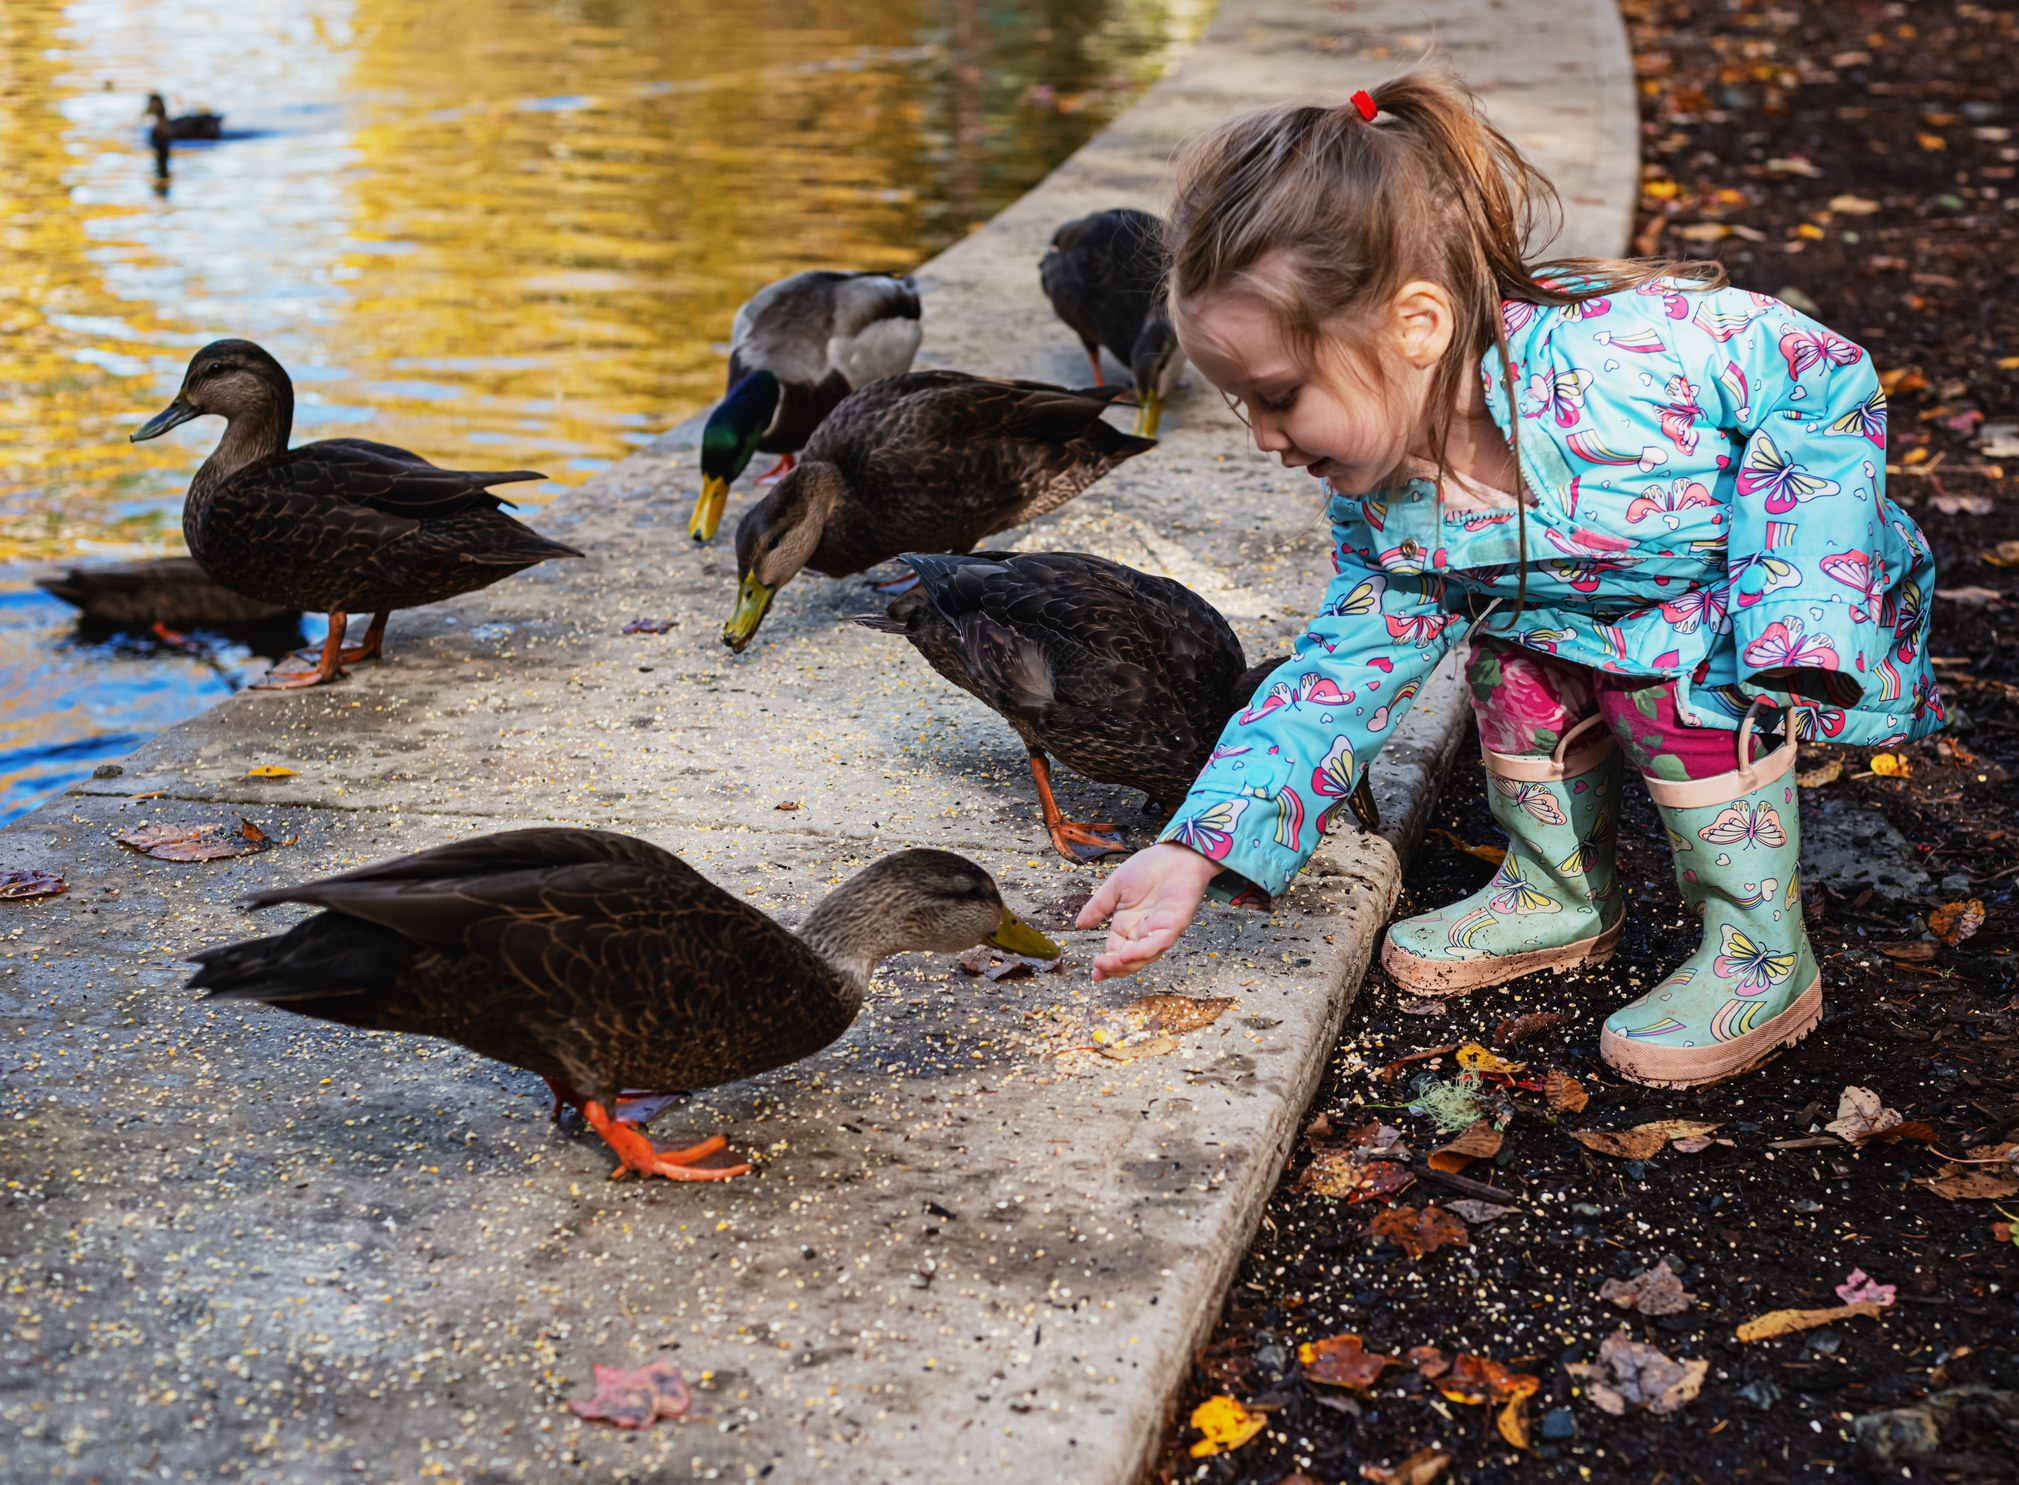 A little girl feeding ducks at a pond